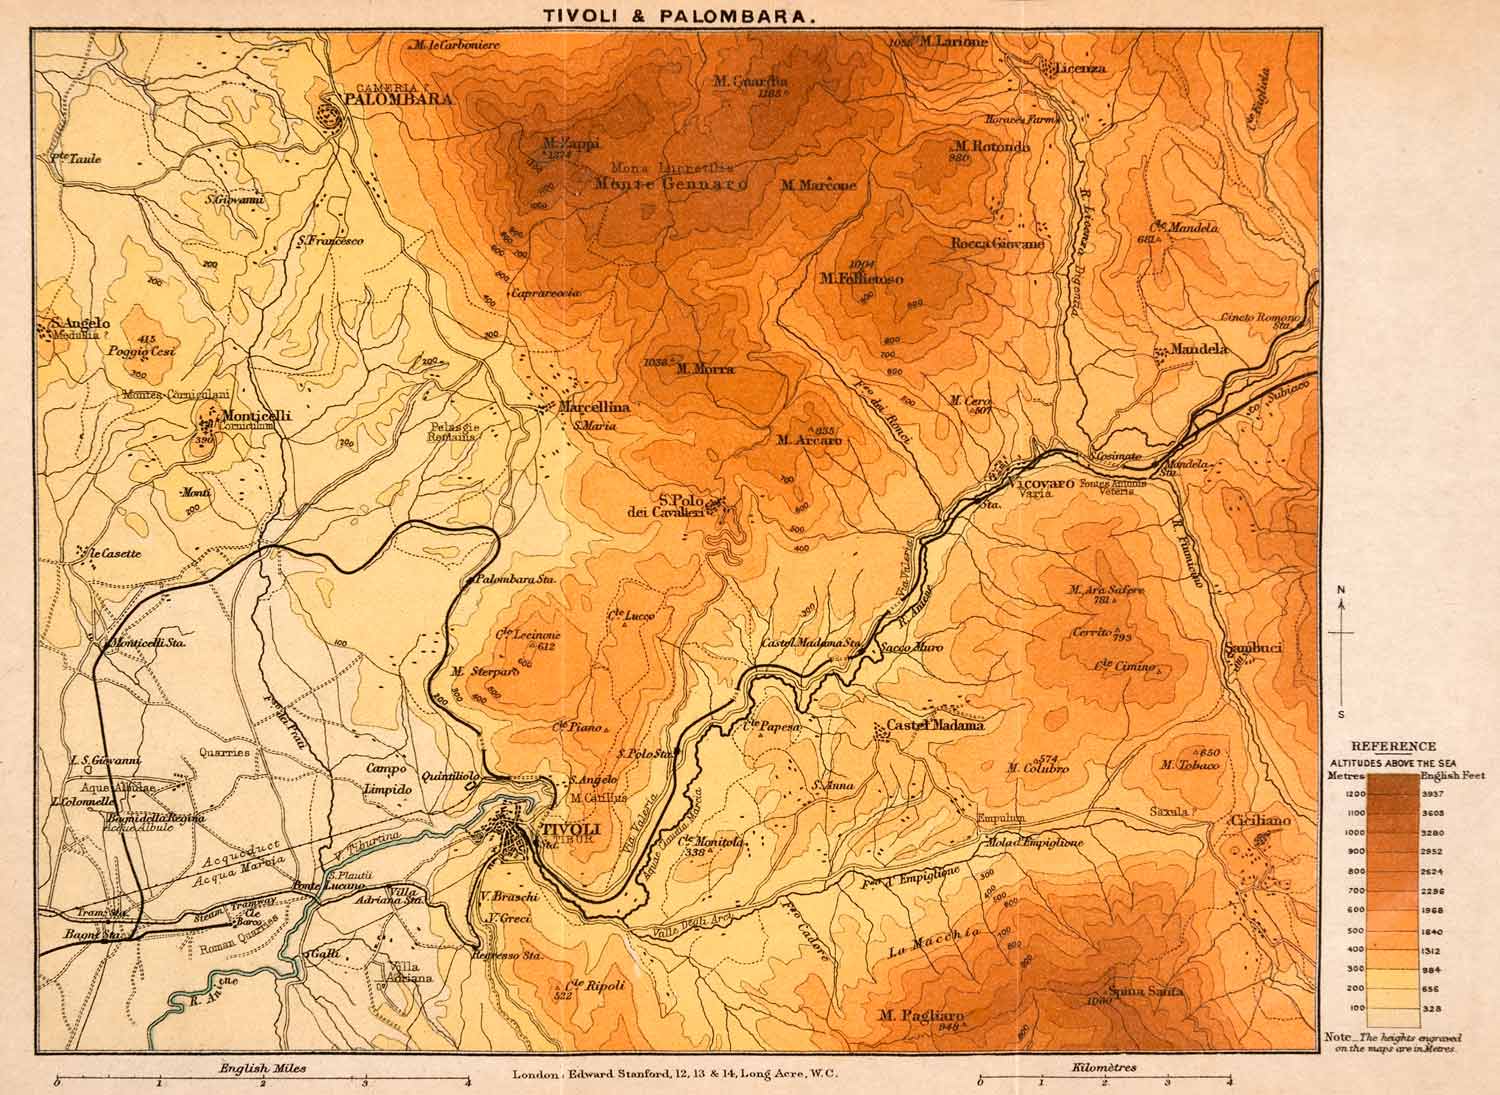 1908 Lithograph Map Altitude Tivoli Palombara Mount Gennaro Pagliaro XGJA5